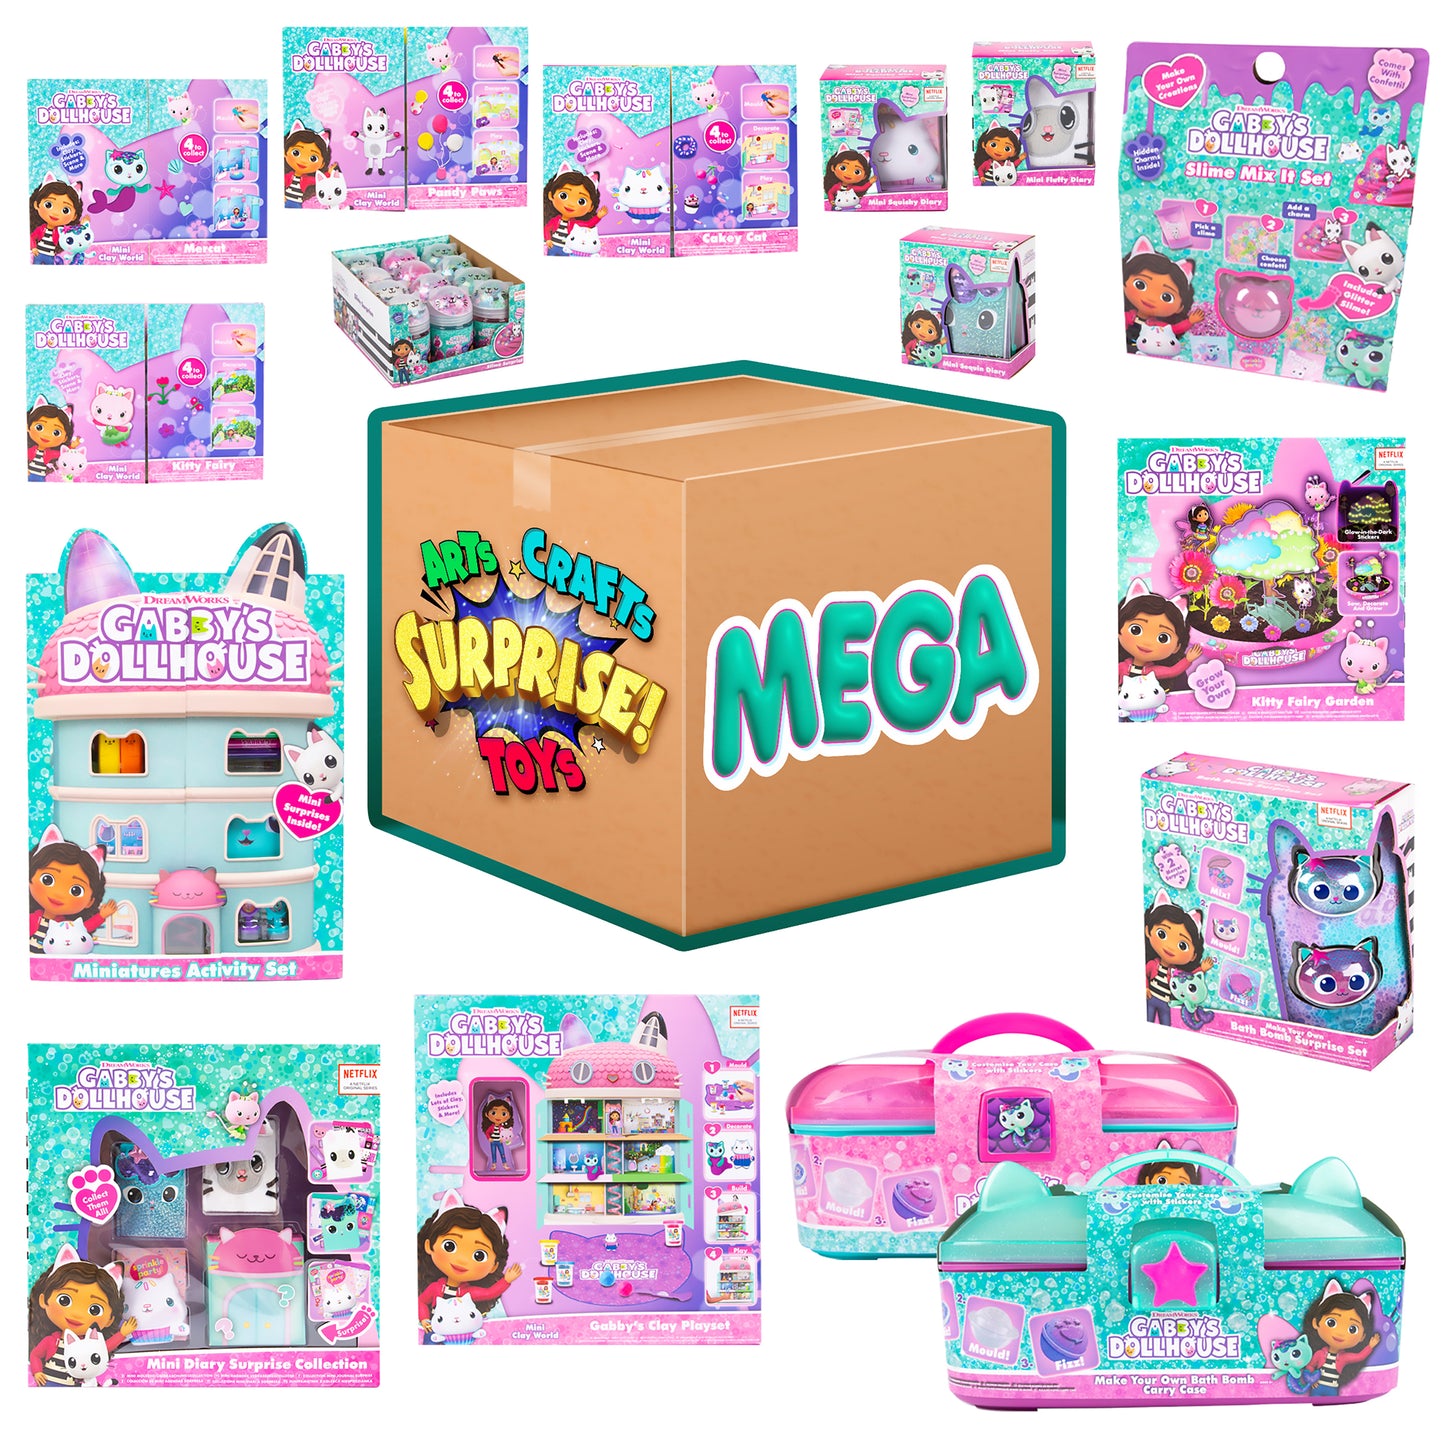 Gabbys Dollhouse Mega Box